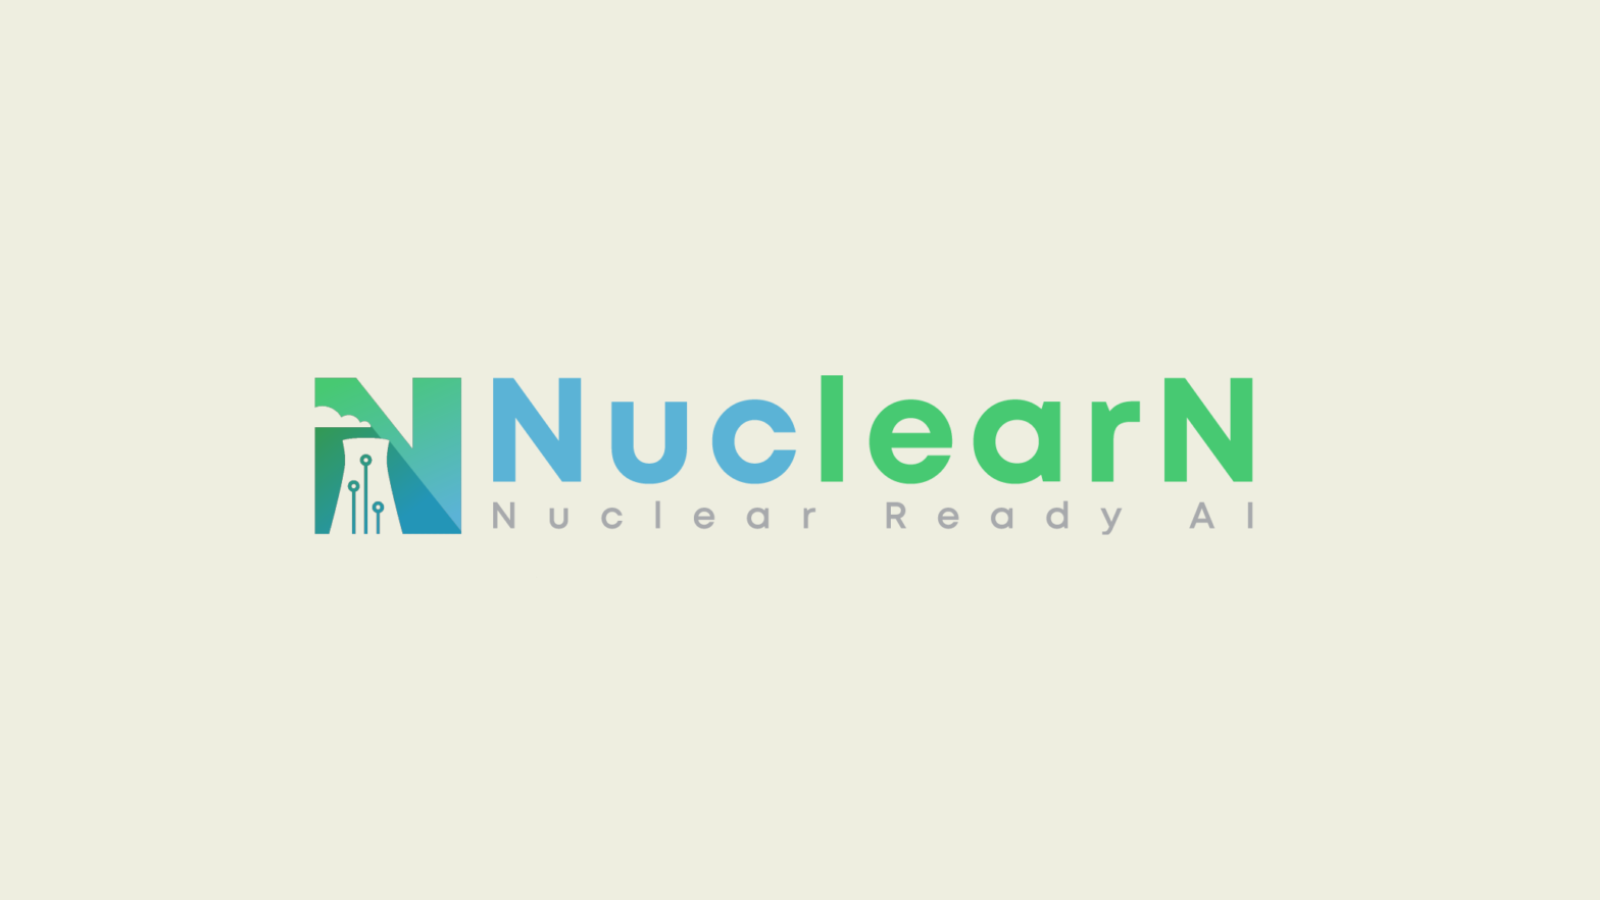 NuclearN.ai logo